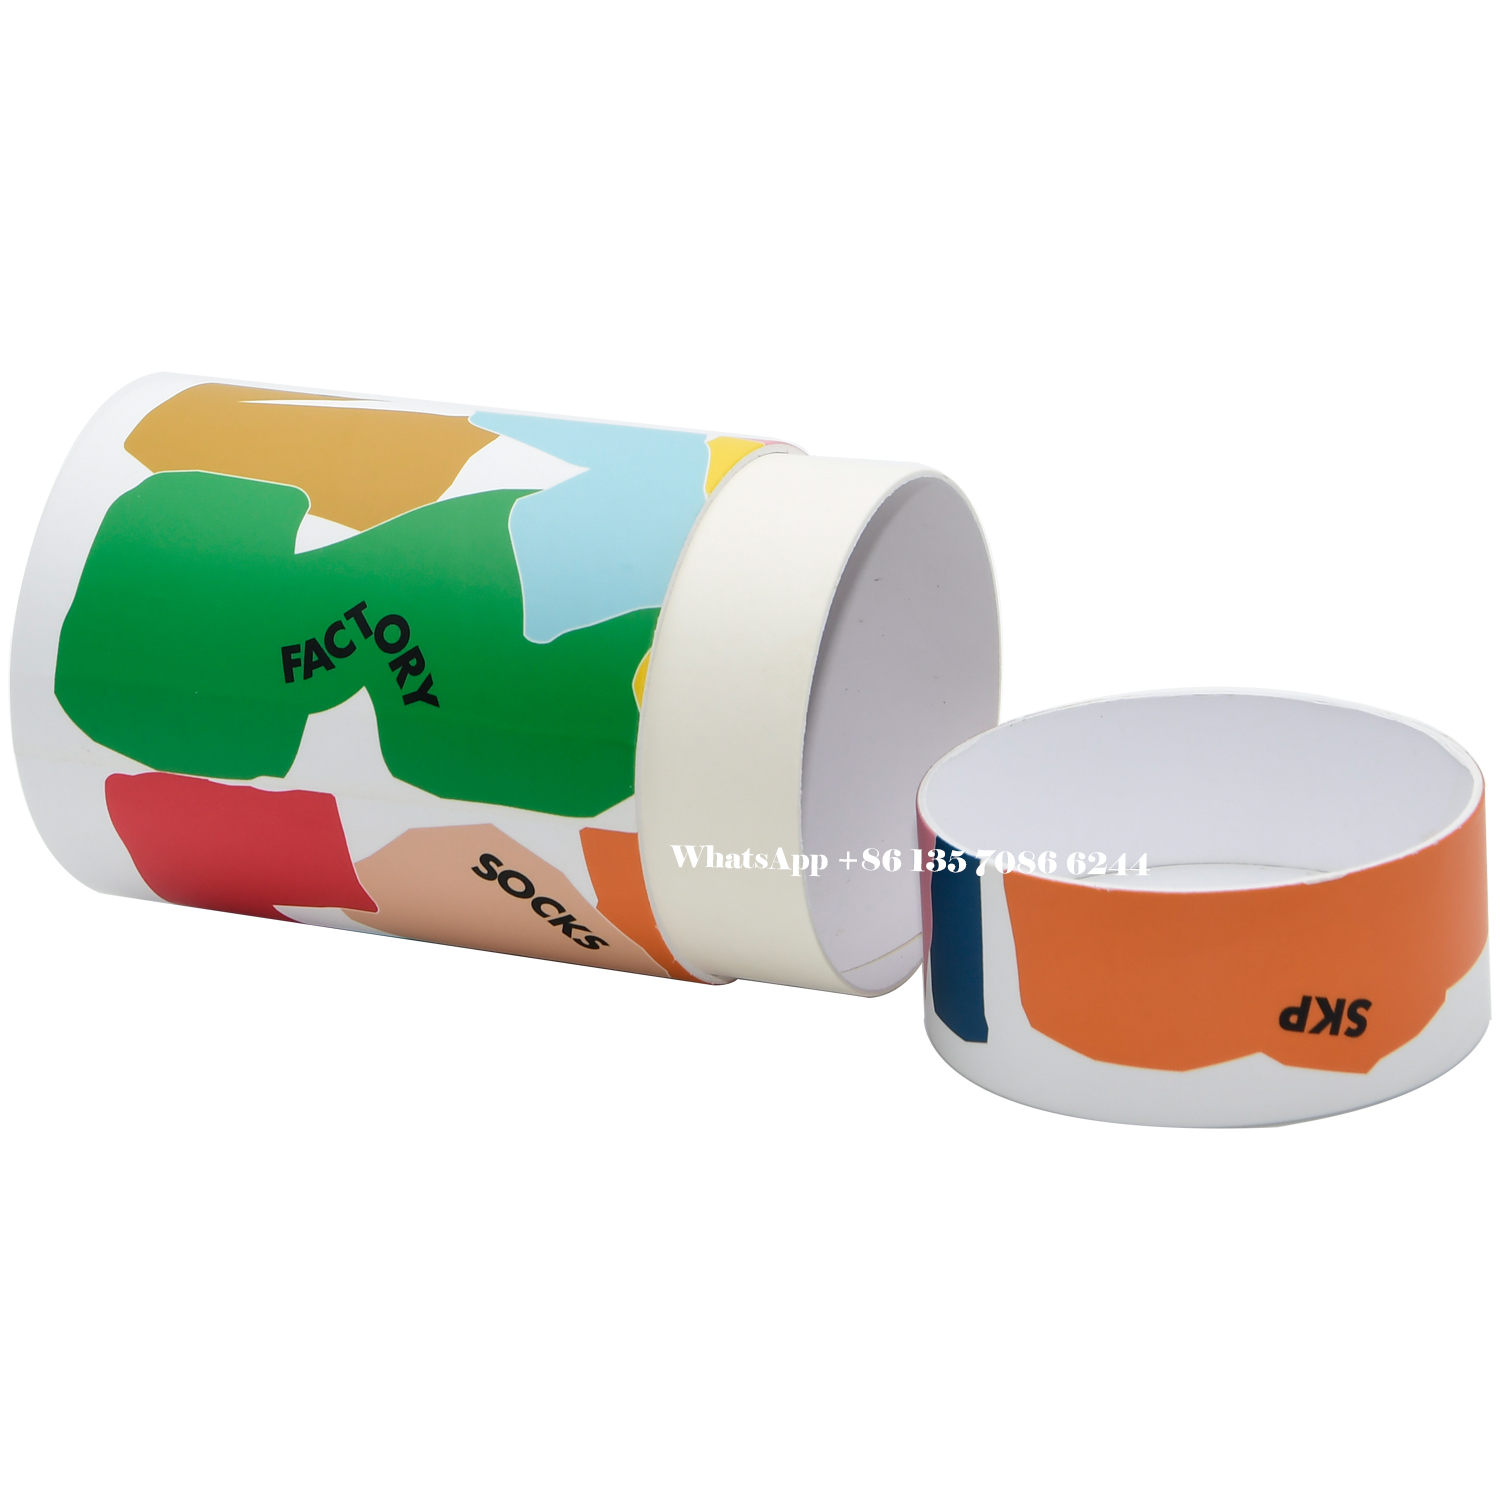  Embalagens de cilindro de papel para meias personalizadas  